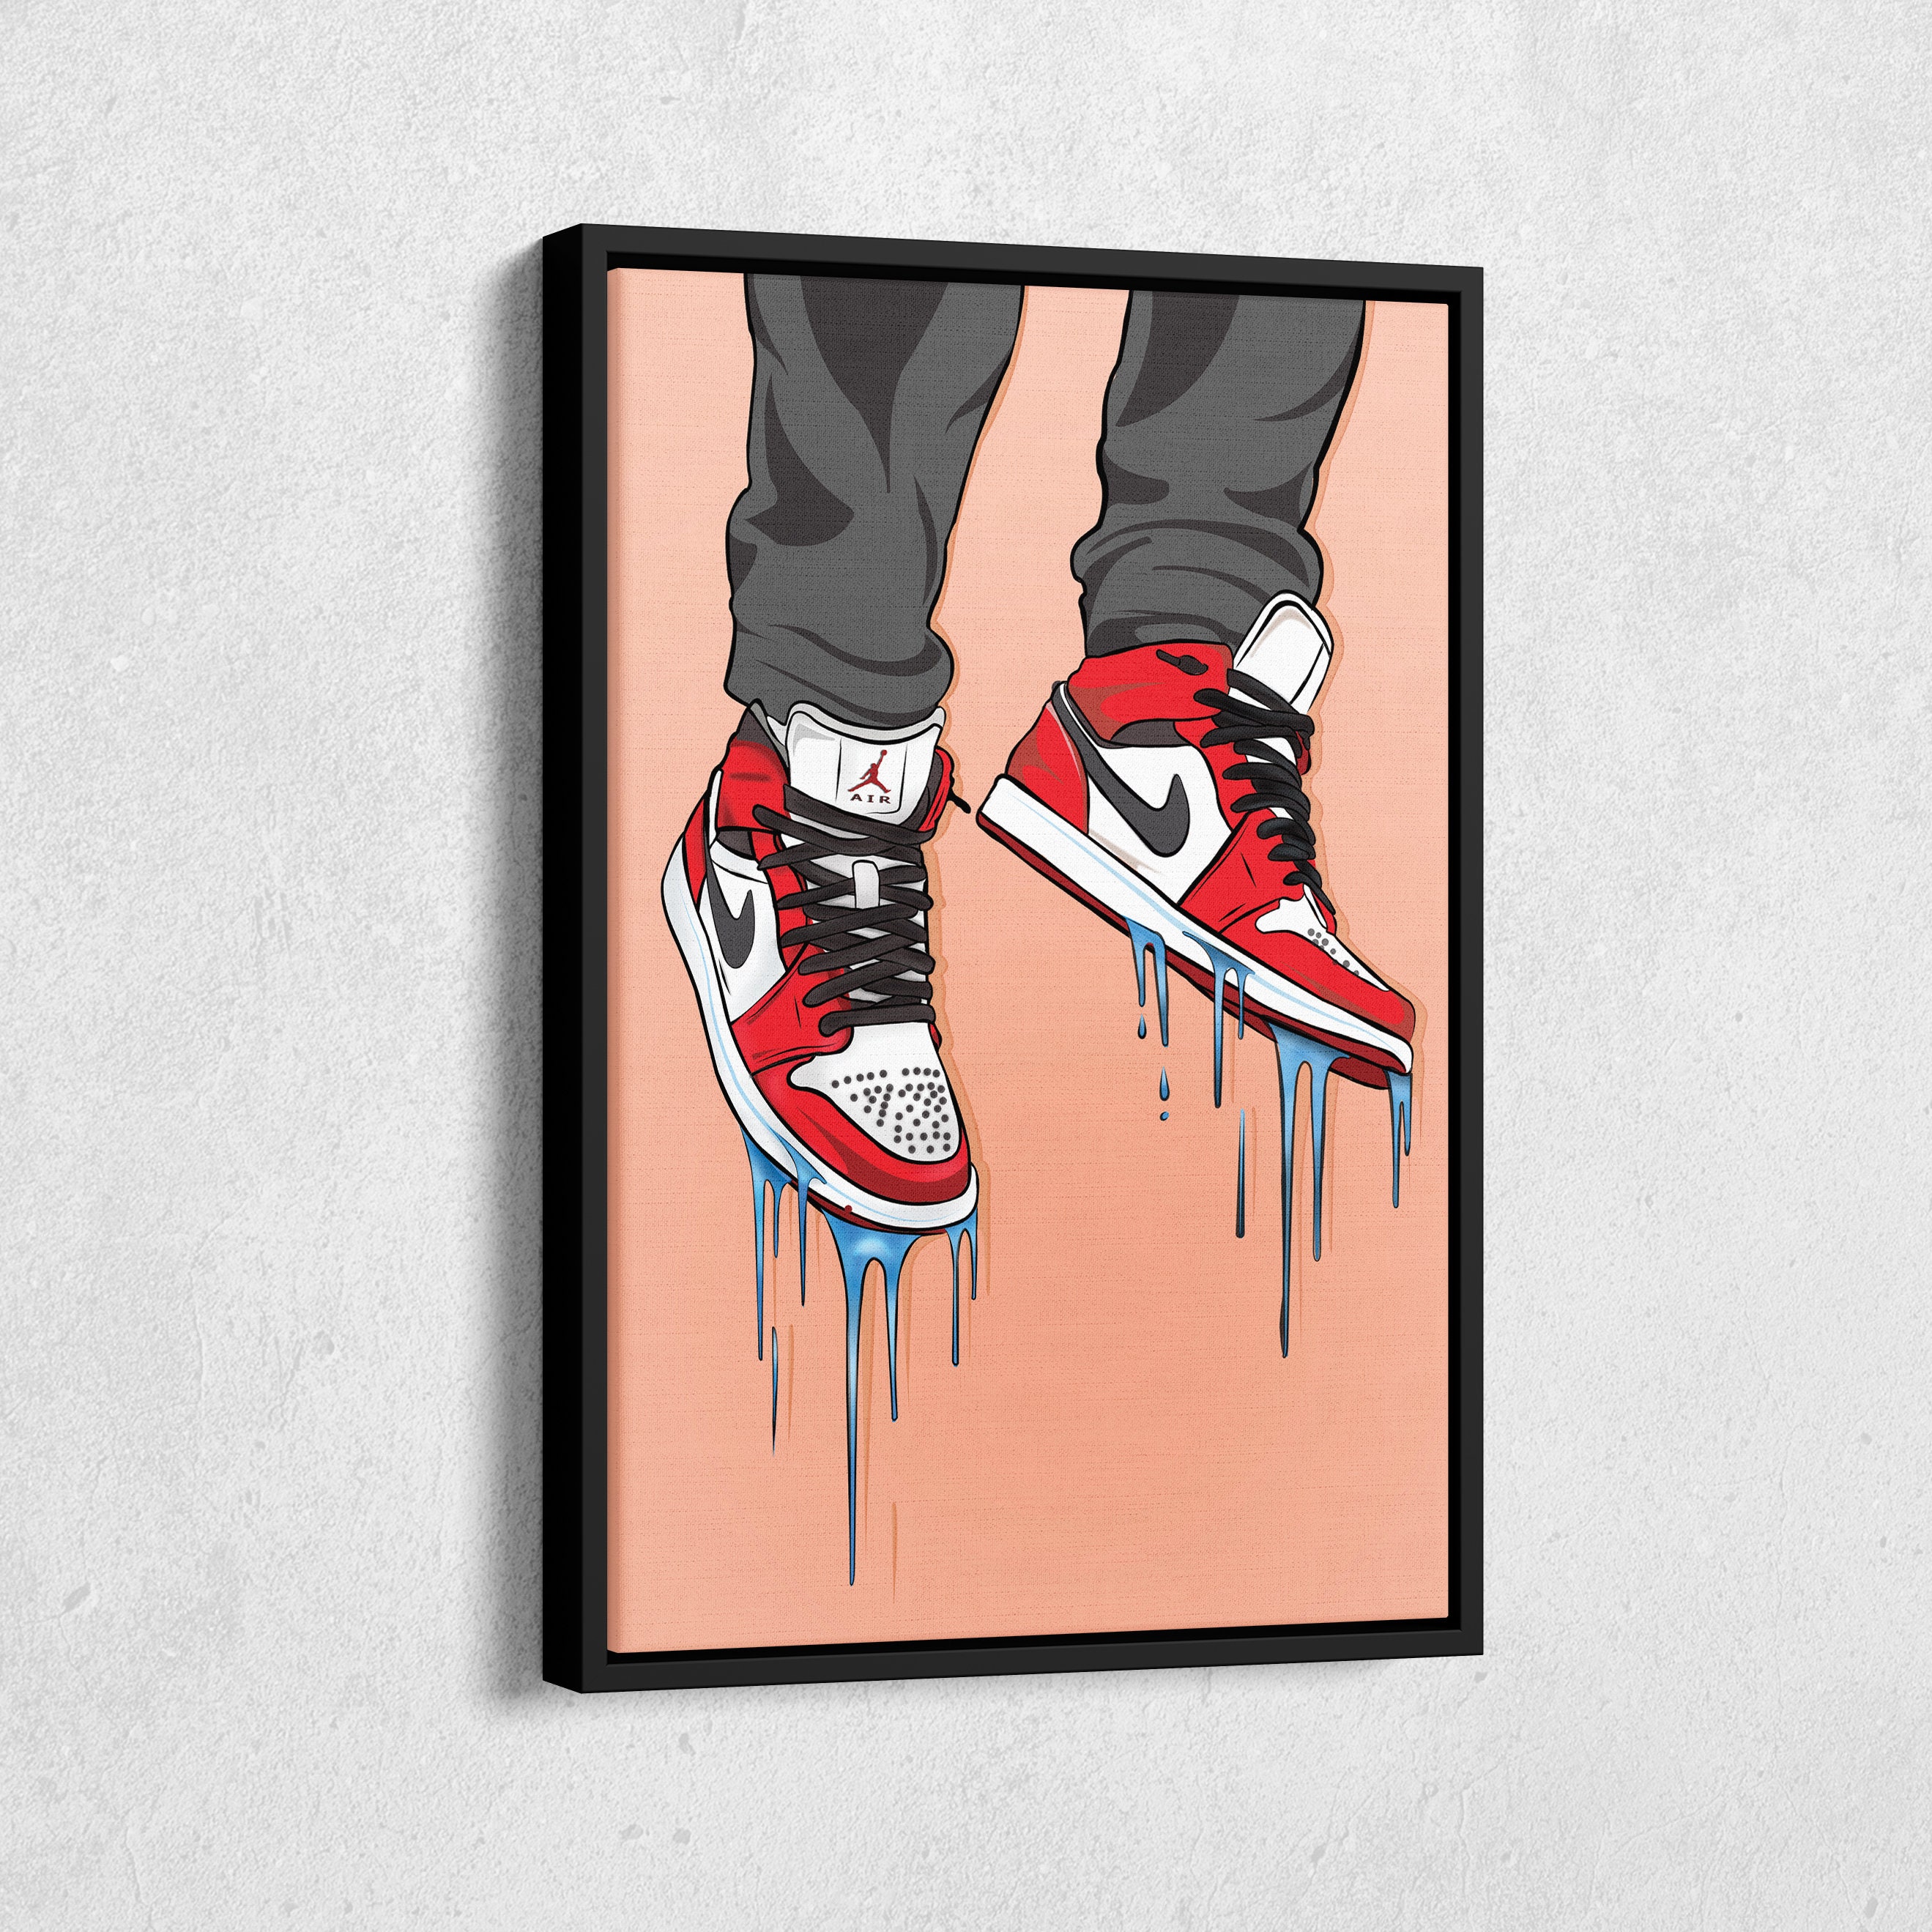 Air Jordan 4 Poster Project : r/graphic_design